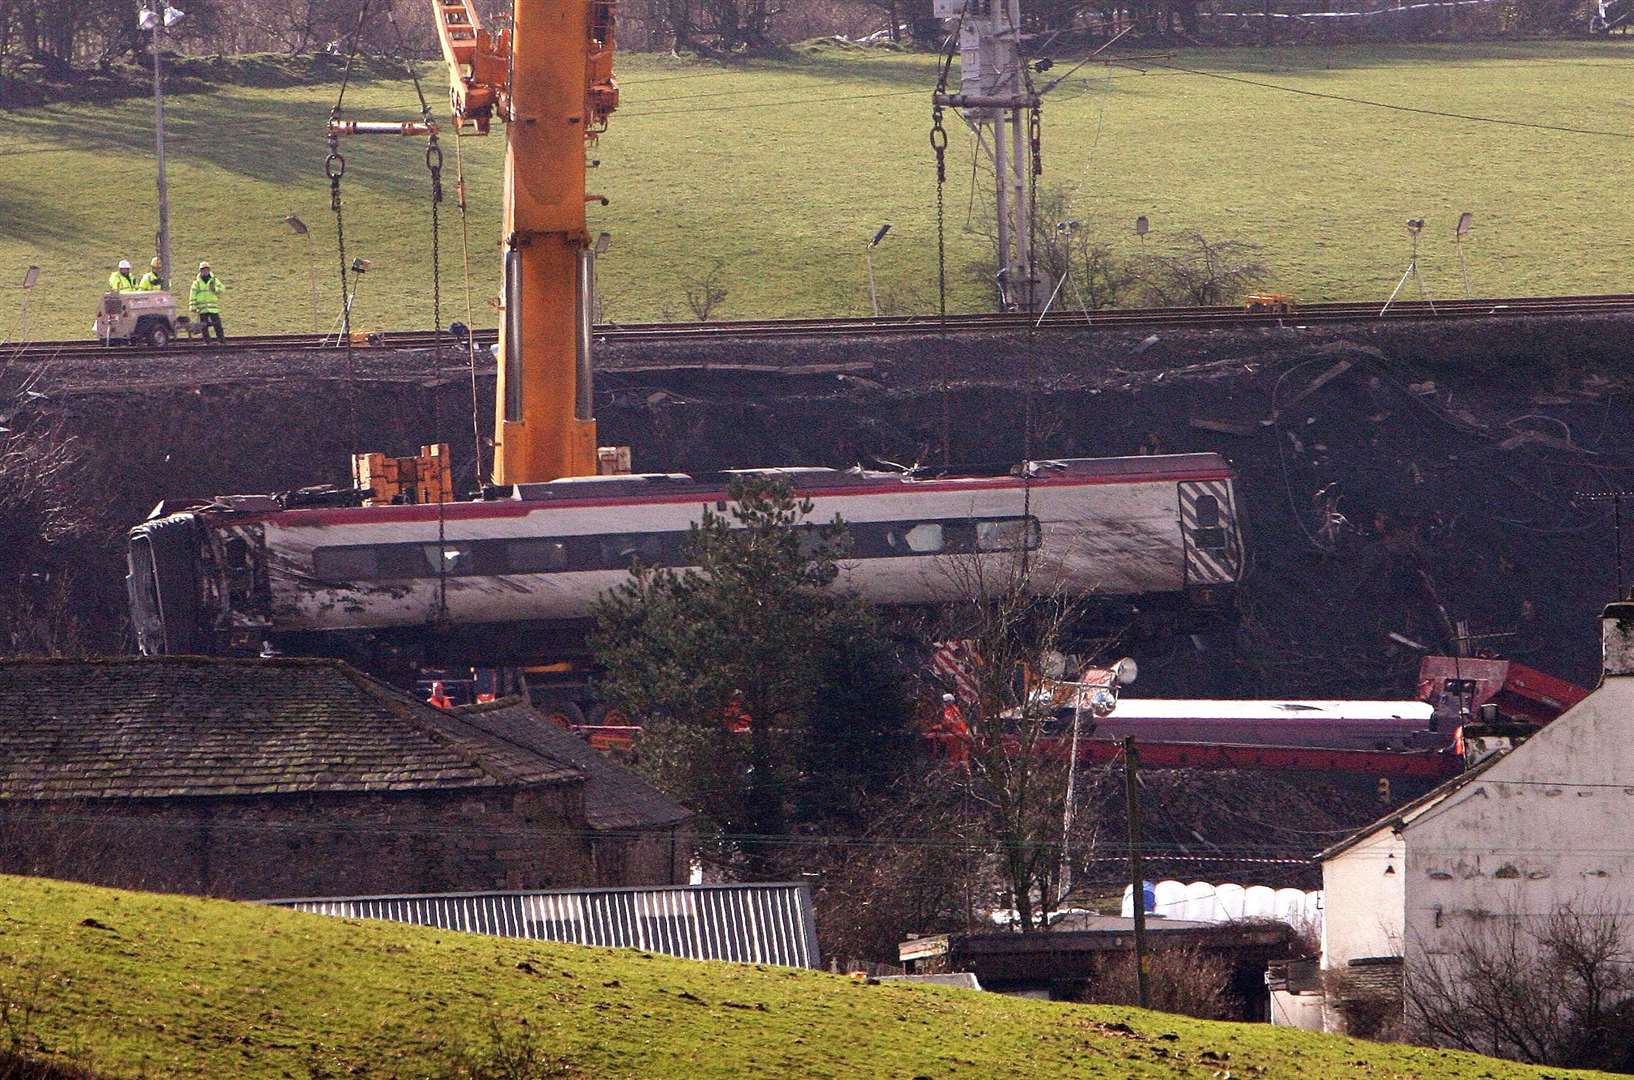 The scene of the Virgin train crash near Grayrigg in Cumbria in February 2007 (Owen Humphreys/PA)